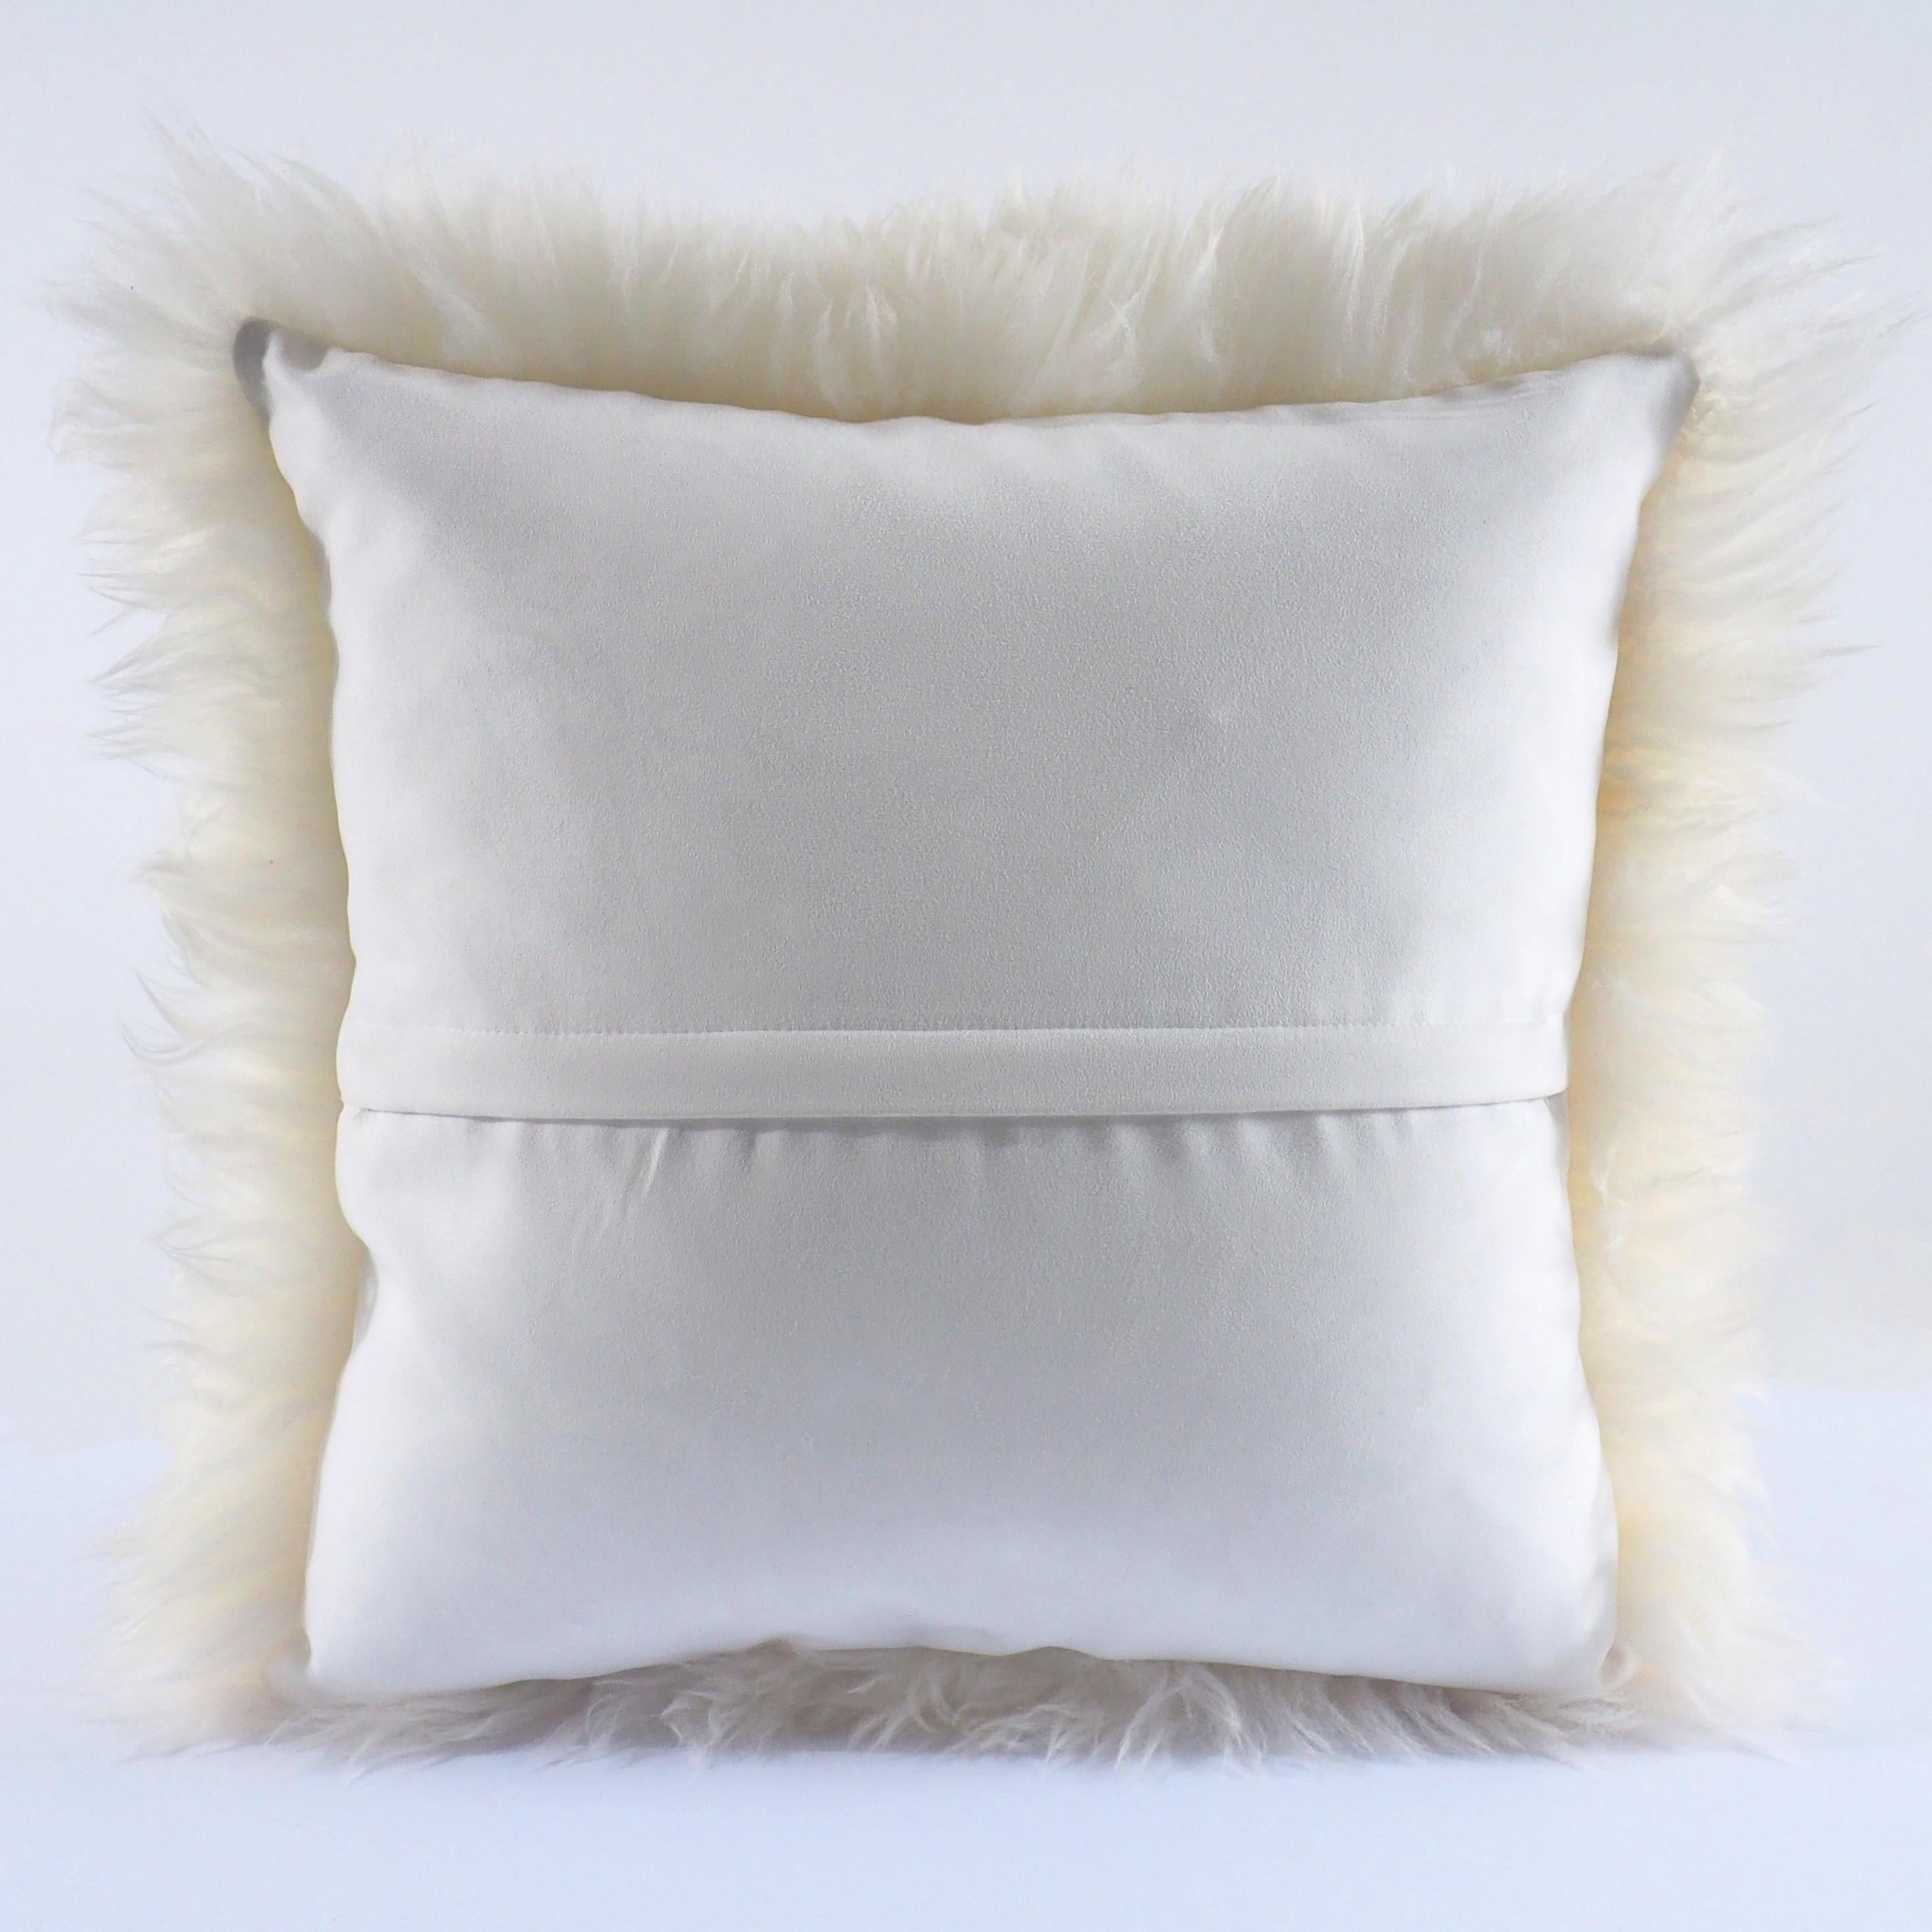 Italian Milky Way Wool White Shearling Sheepskin Pillow Fluffy Cushion by Muchi Decor For Sale